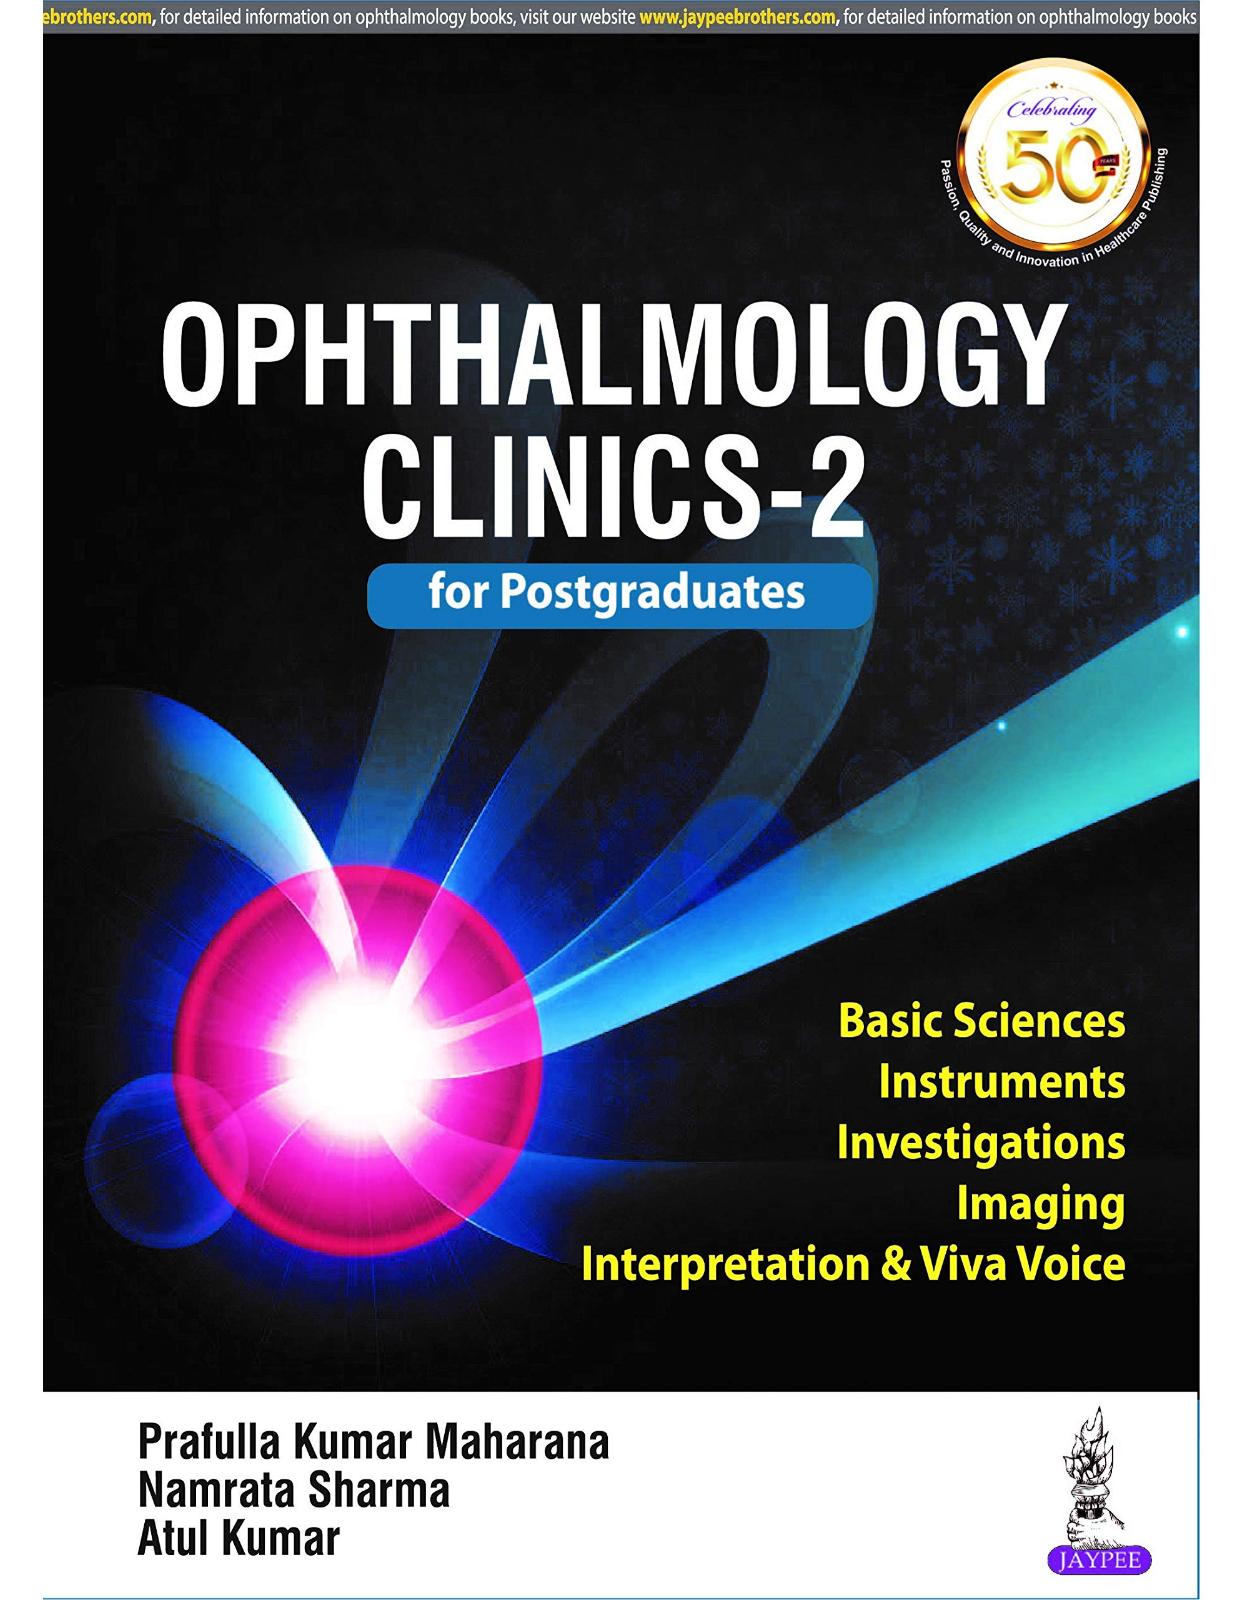 Ophthalmology Clinics for Postgraduates